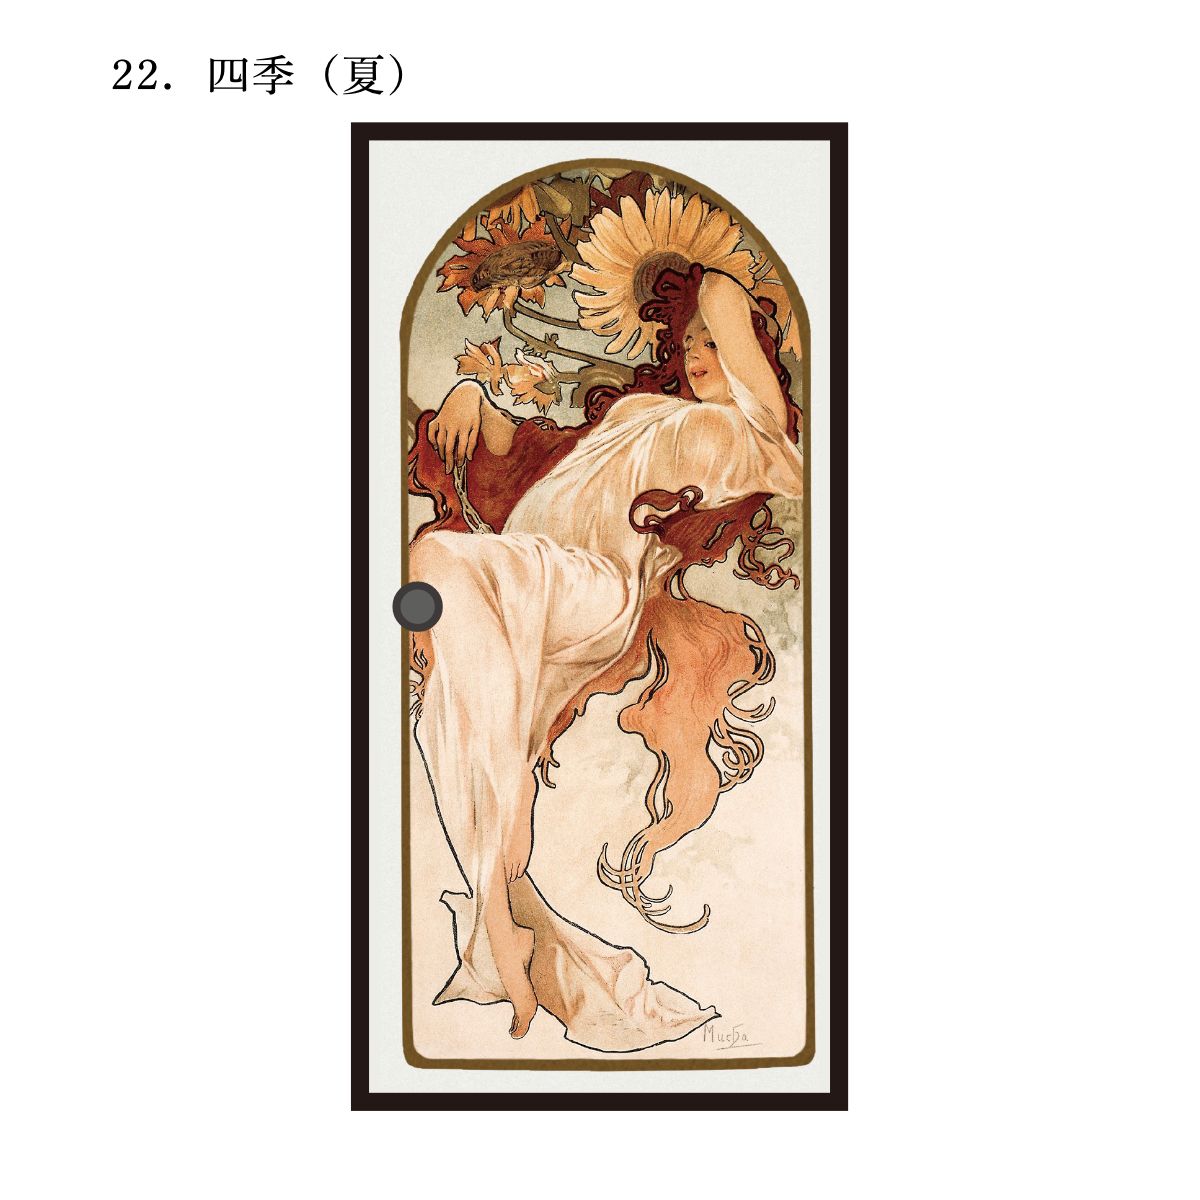 World Famous Painting Fusuma Paper Mucha Four Seasons (Summer) 1 Sheet Water Paste Type Width 91cm x Length 182cm Fusuma Paper Asahipen WWA-022F